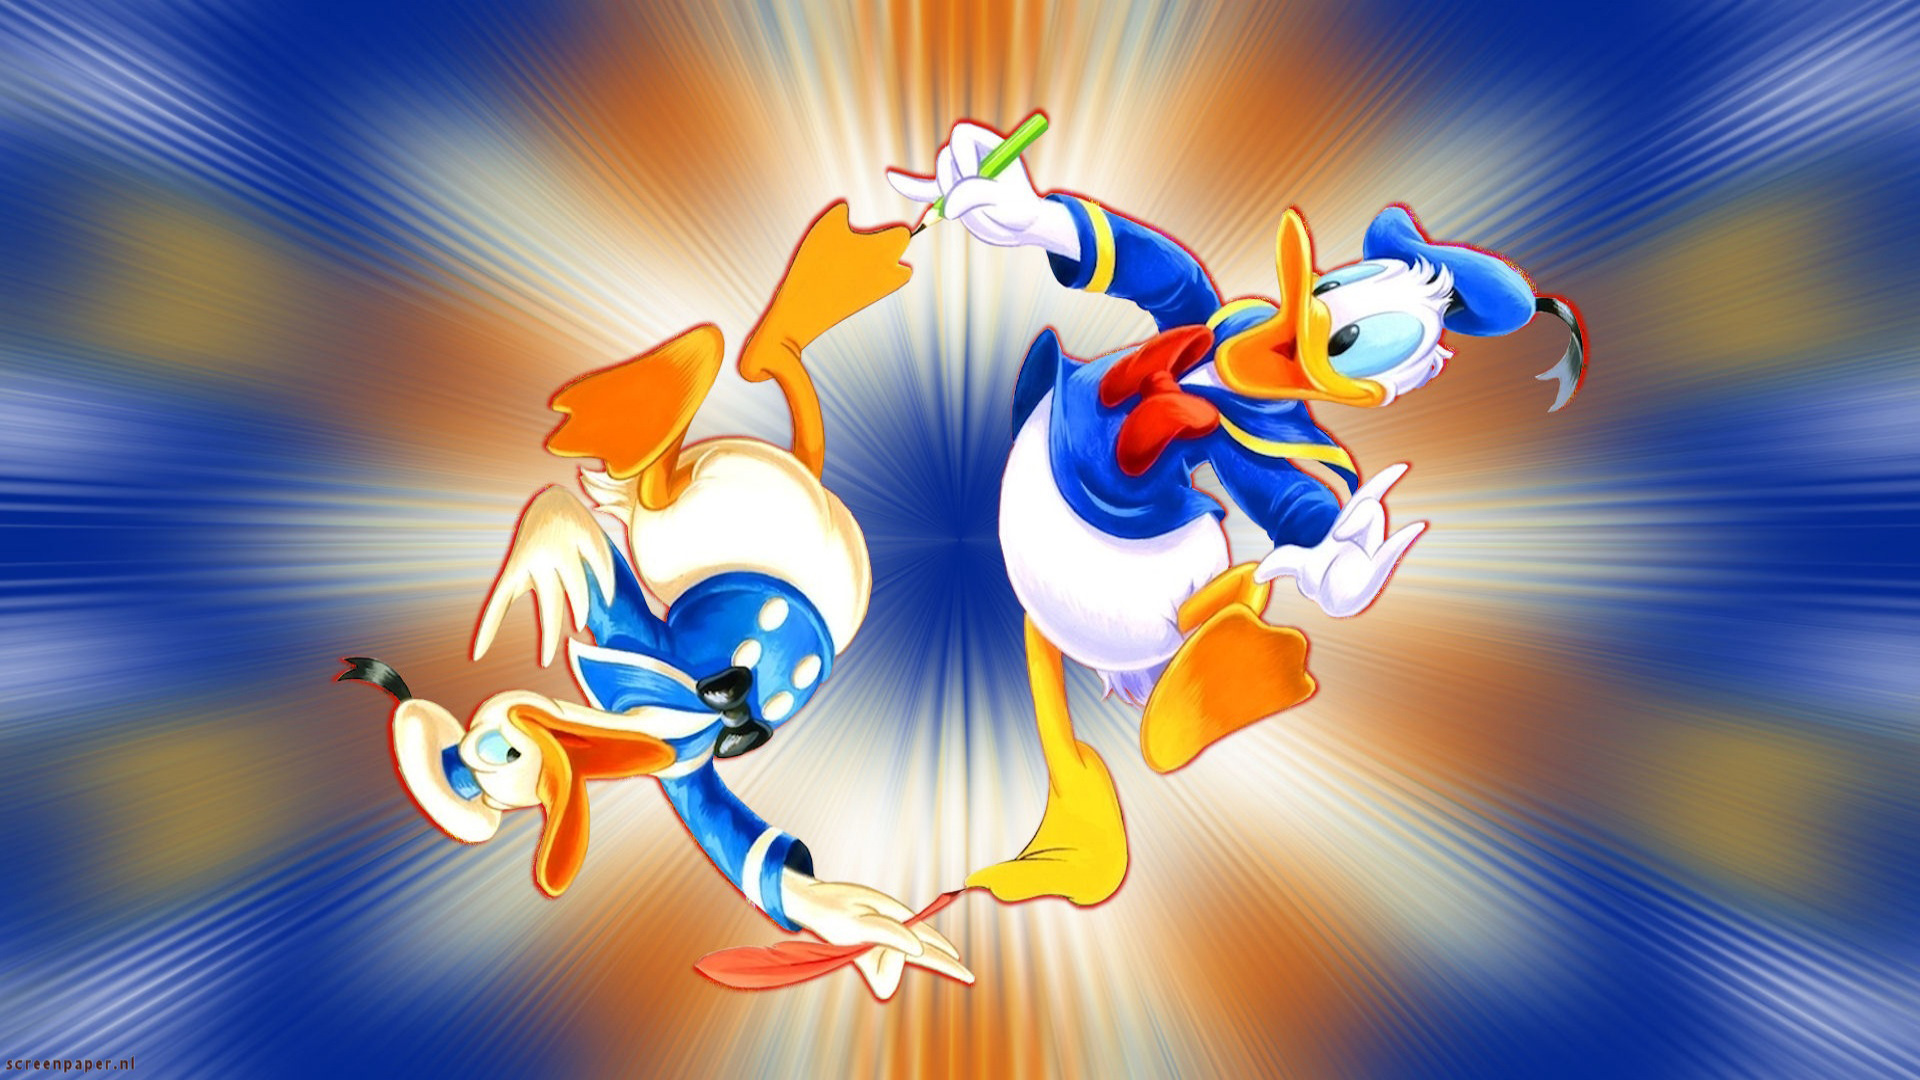 Donald Duck Picture Hd Wallpaper High Resolution For Desktop 1920x1080